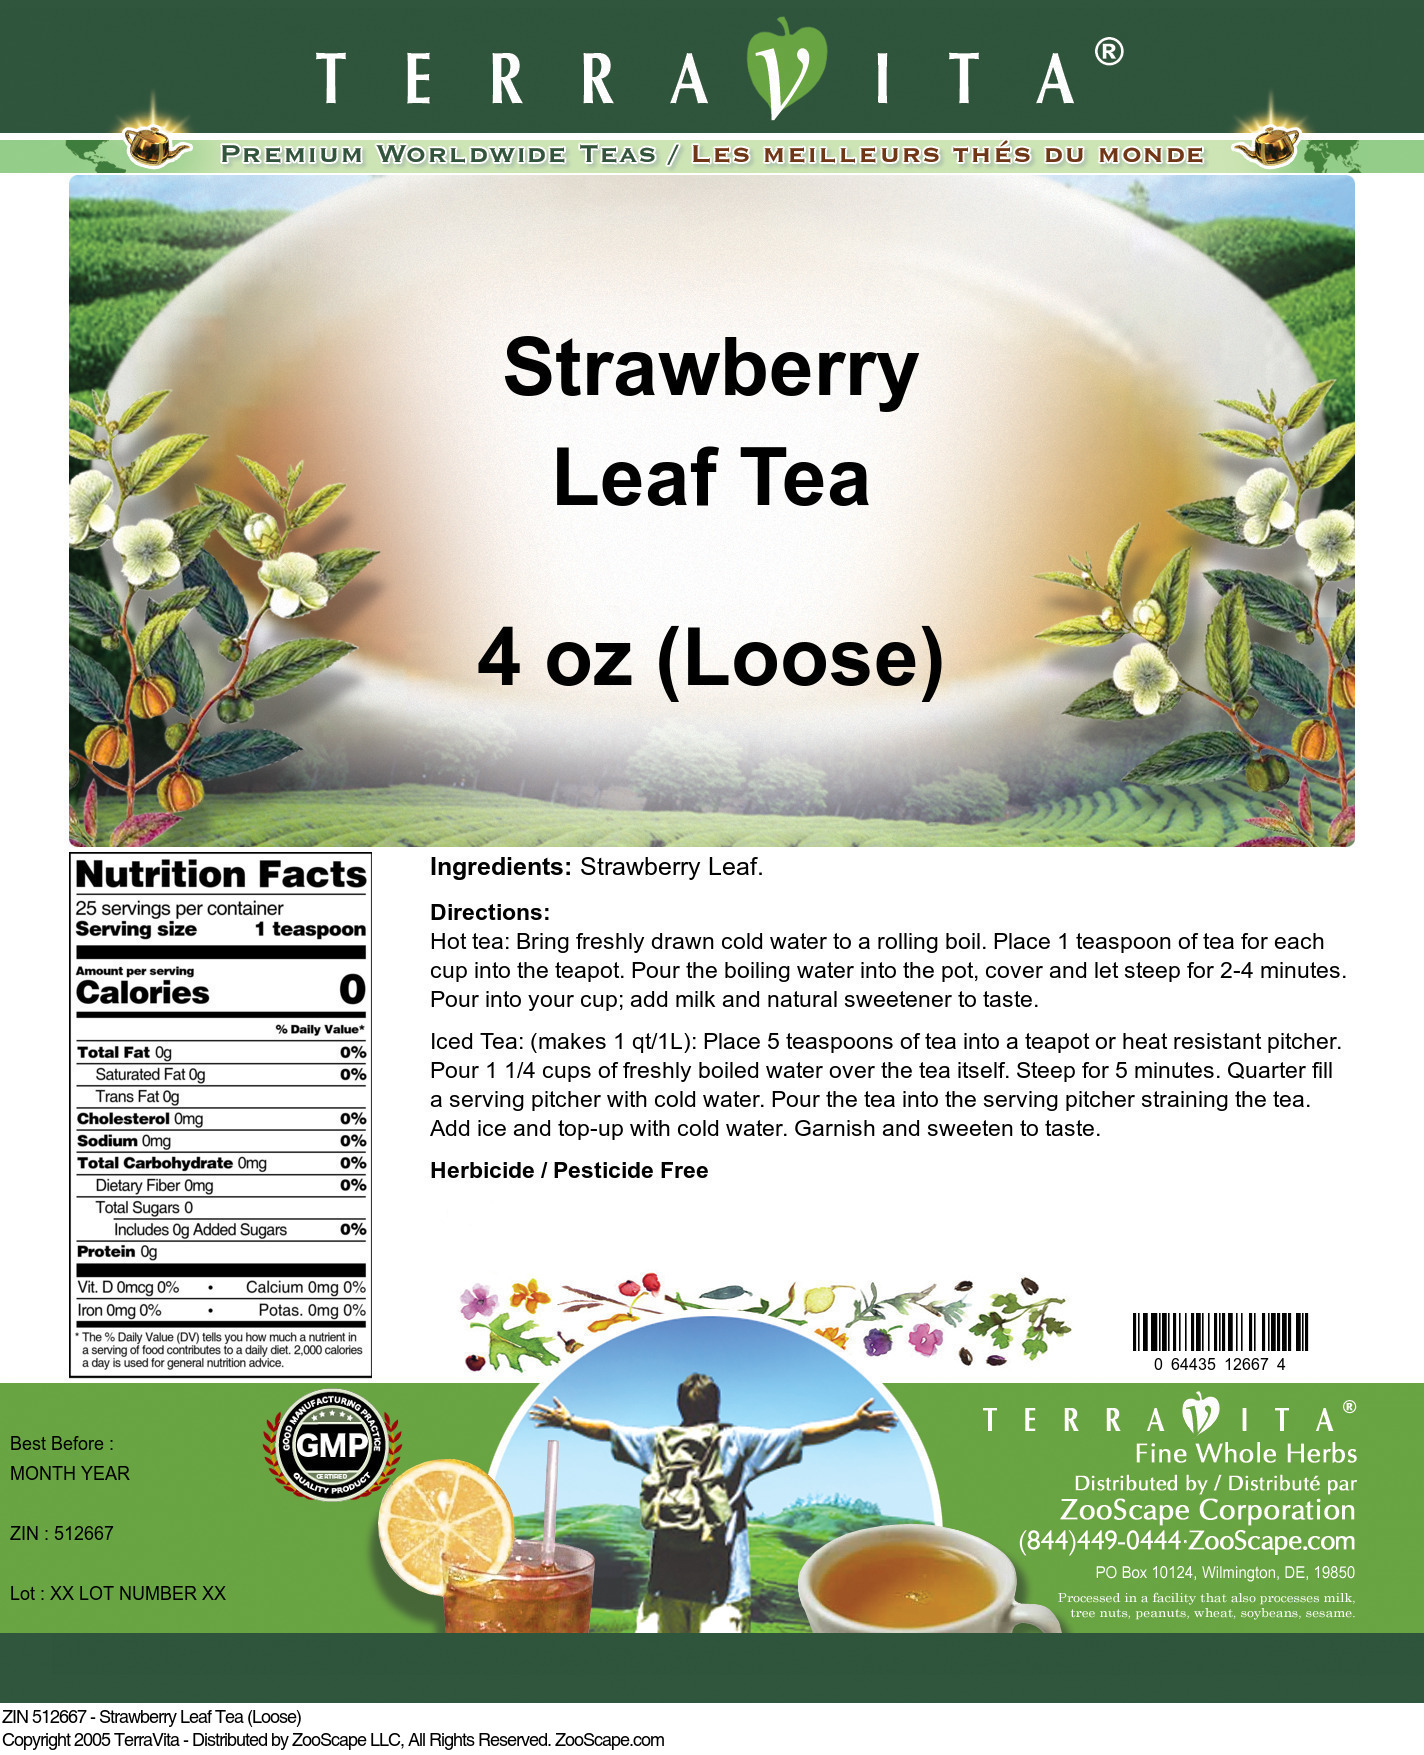 Strawberry Leaf Tea (Loose) - Label